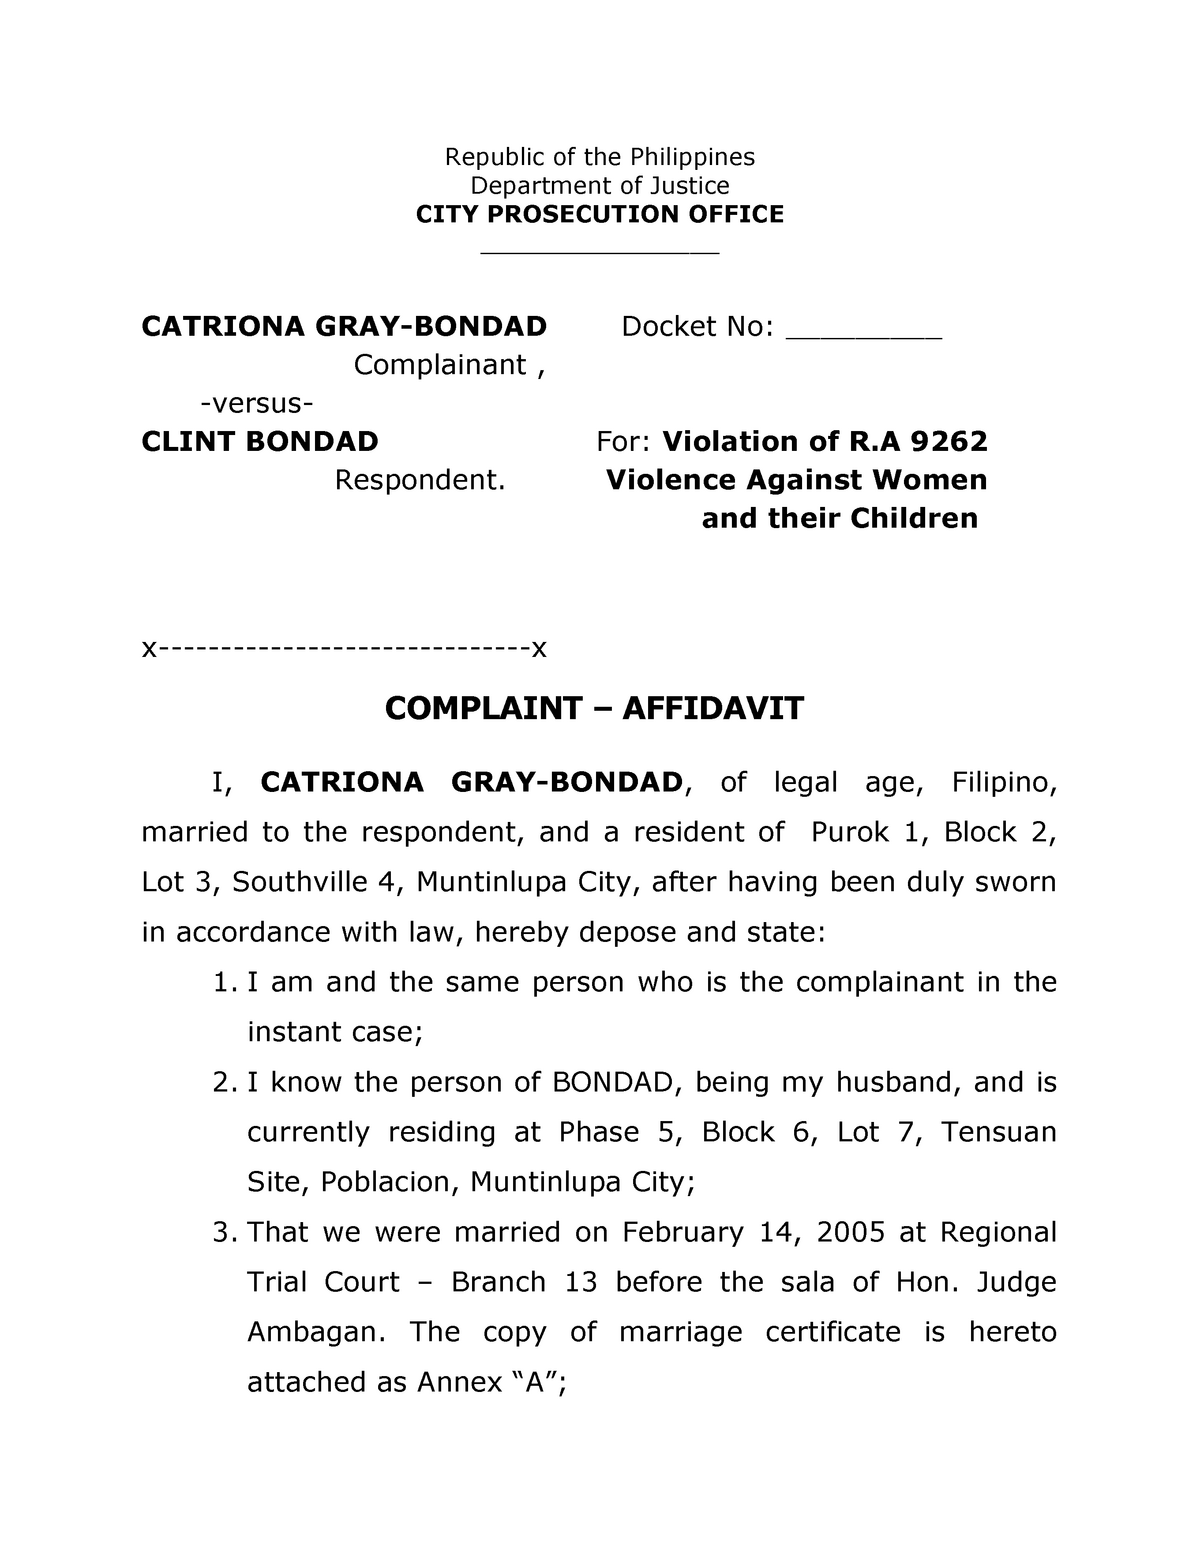 Vawc Affidavit Ra 9262 Republic Of The Philippines Department Of Justice City Prosecution 1235